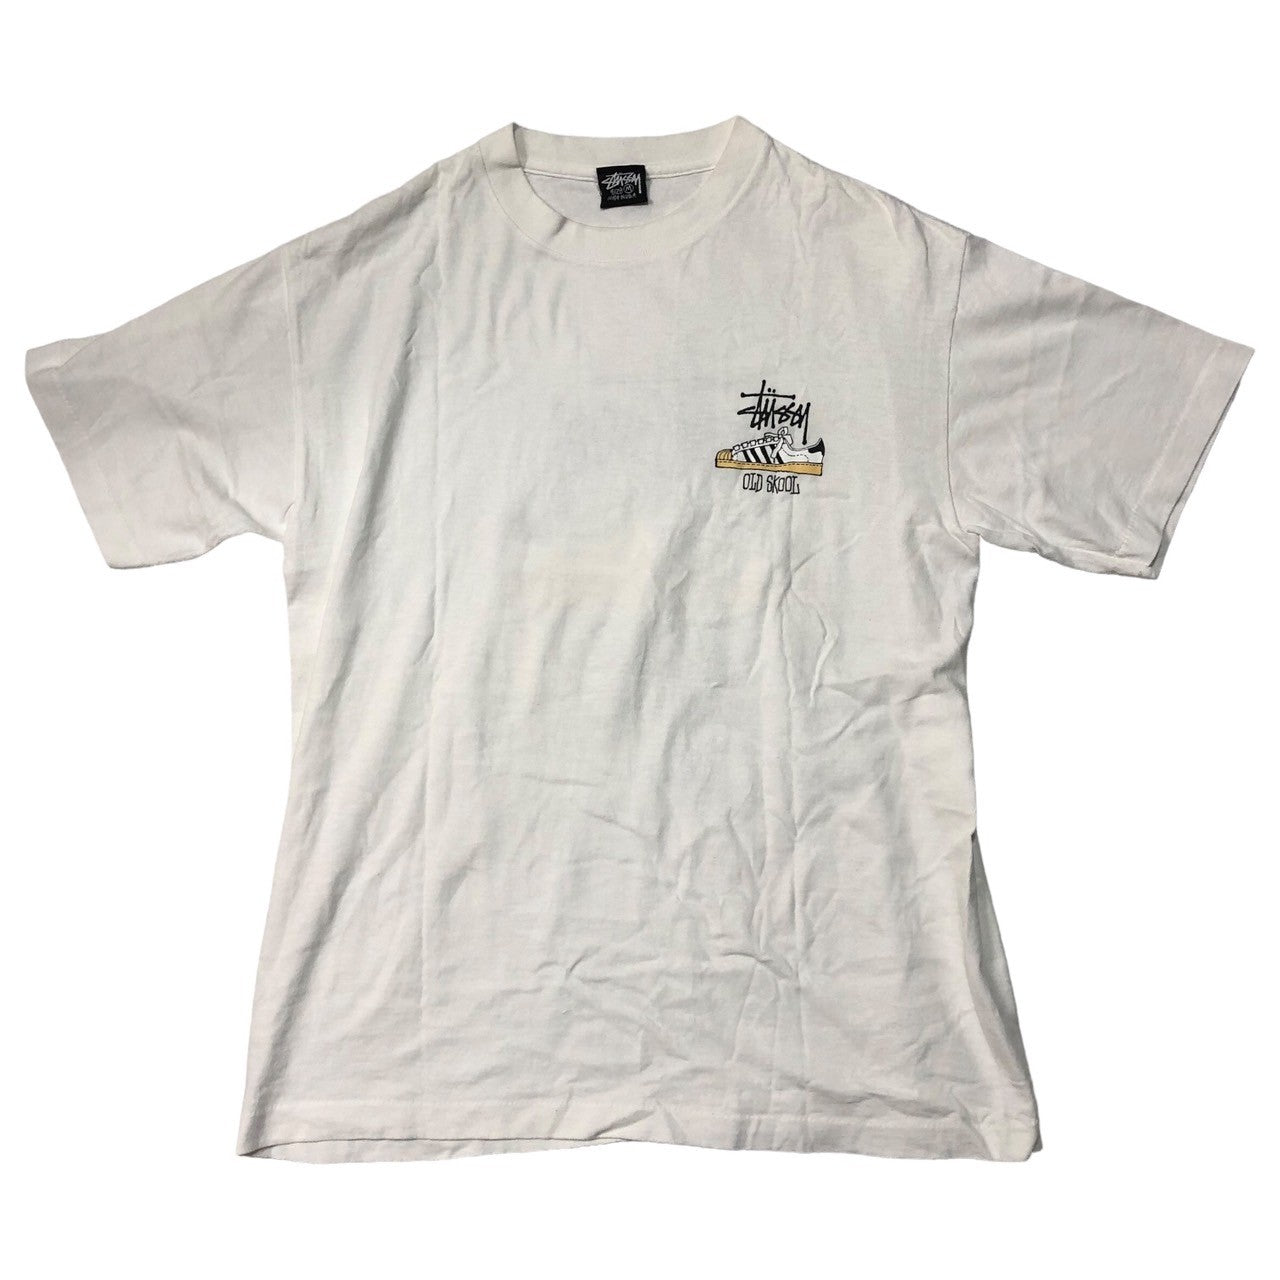 STUSSY(ステューシー) 80's "OLD SKOOL FLAVOR" VINTAGE TEE ヴィンテージ Tシャツ  M ホワイト SUPERSTAR スーパースター 半袖